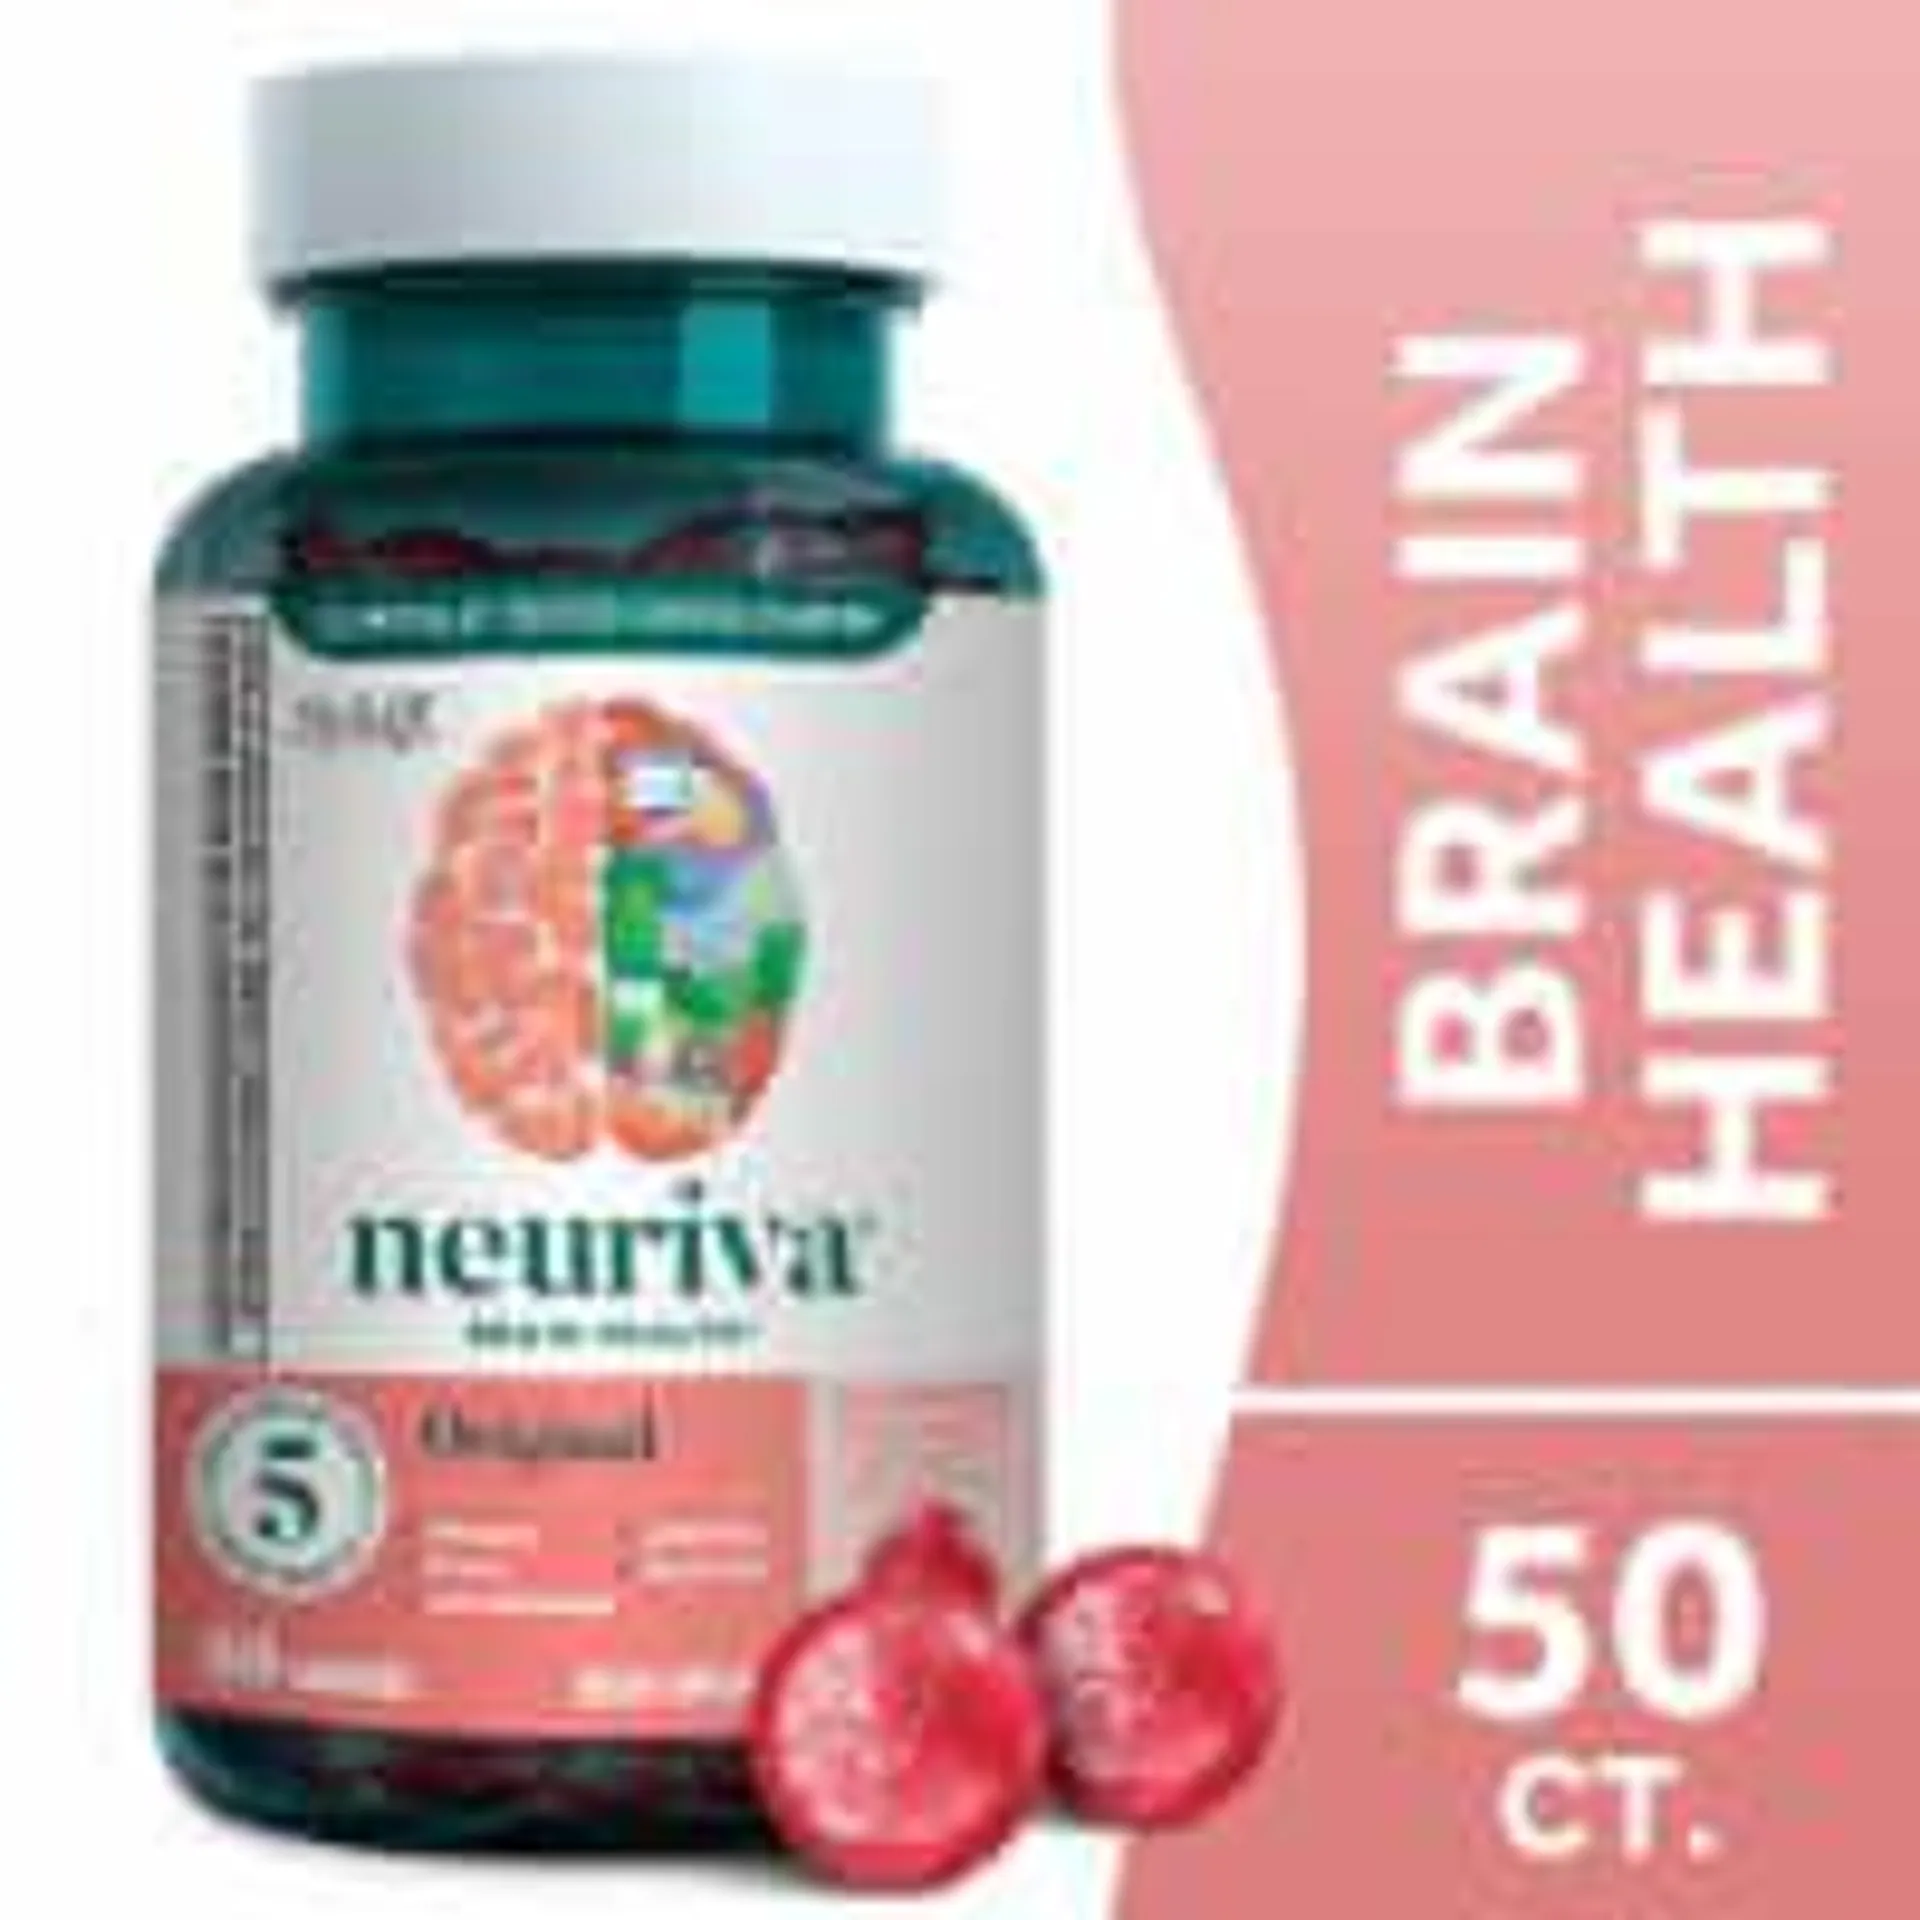 Neuriva® Brain Performance Original Strawberry Flavored Gummies